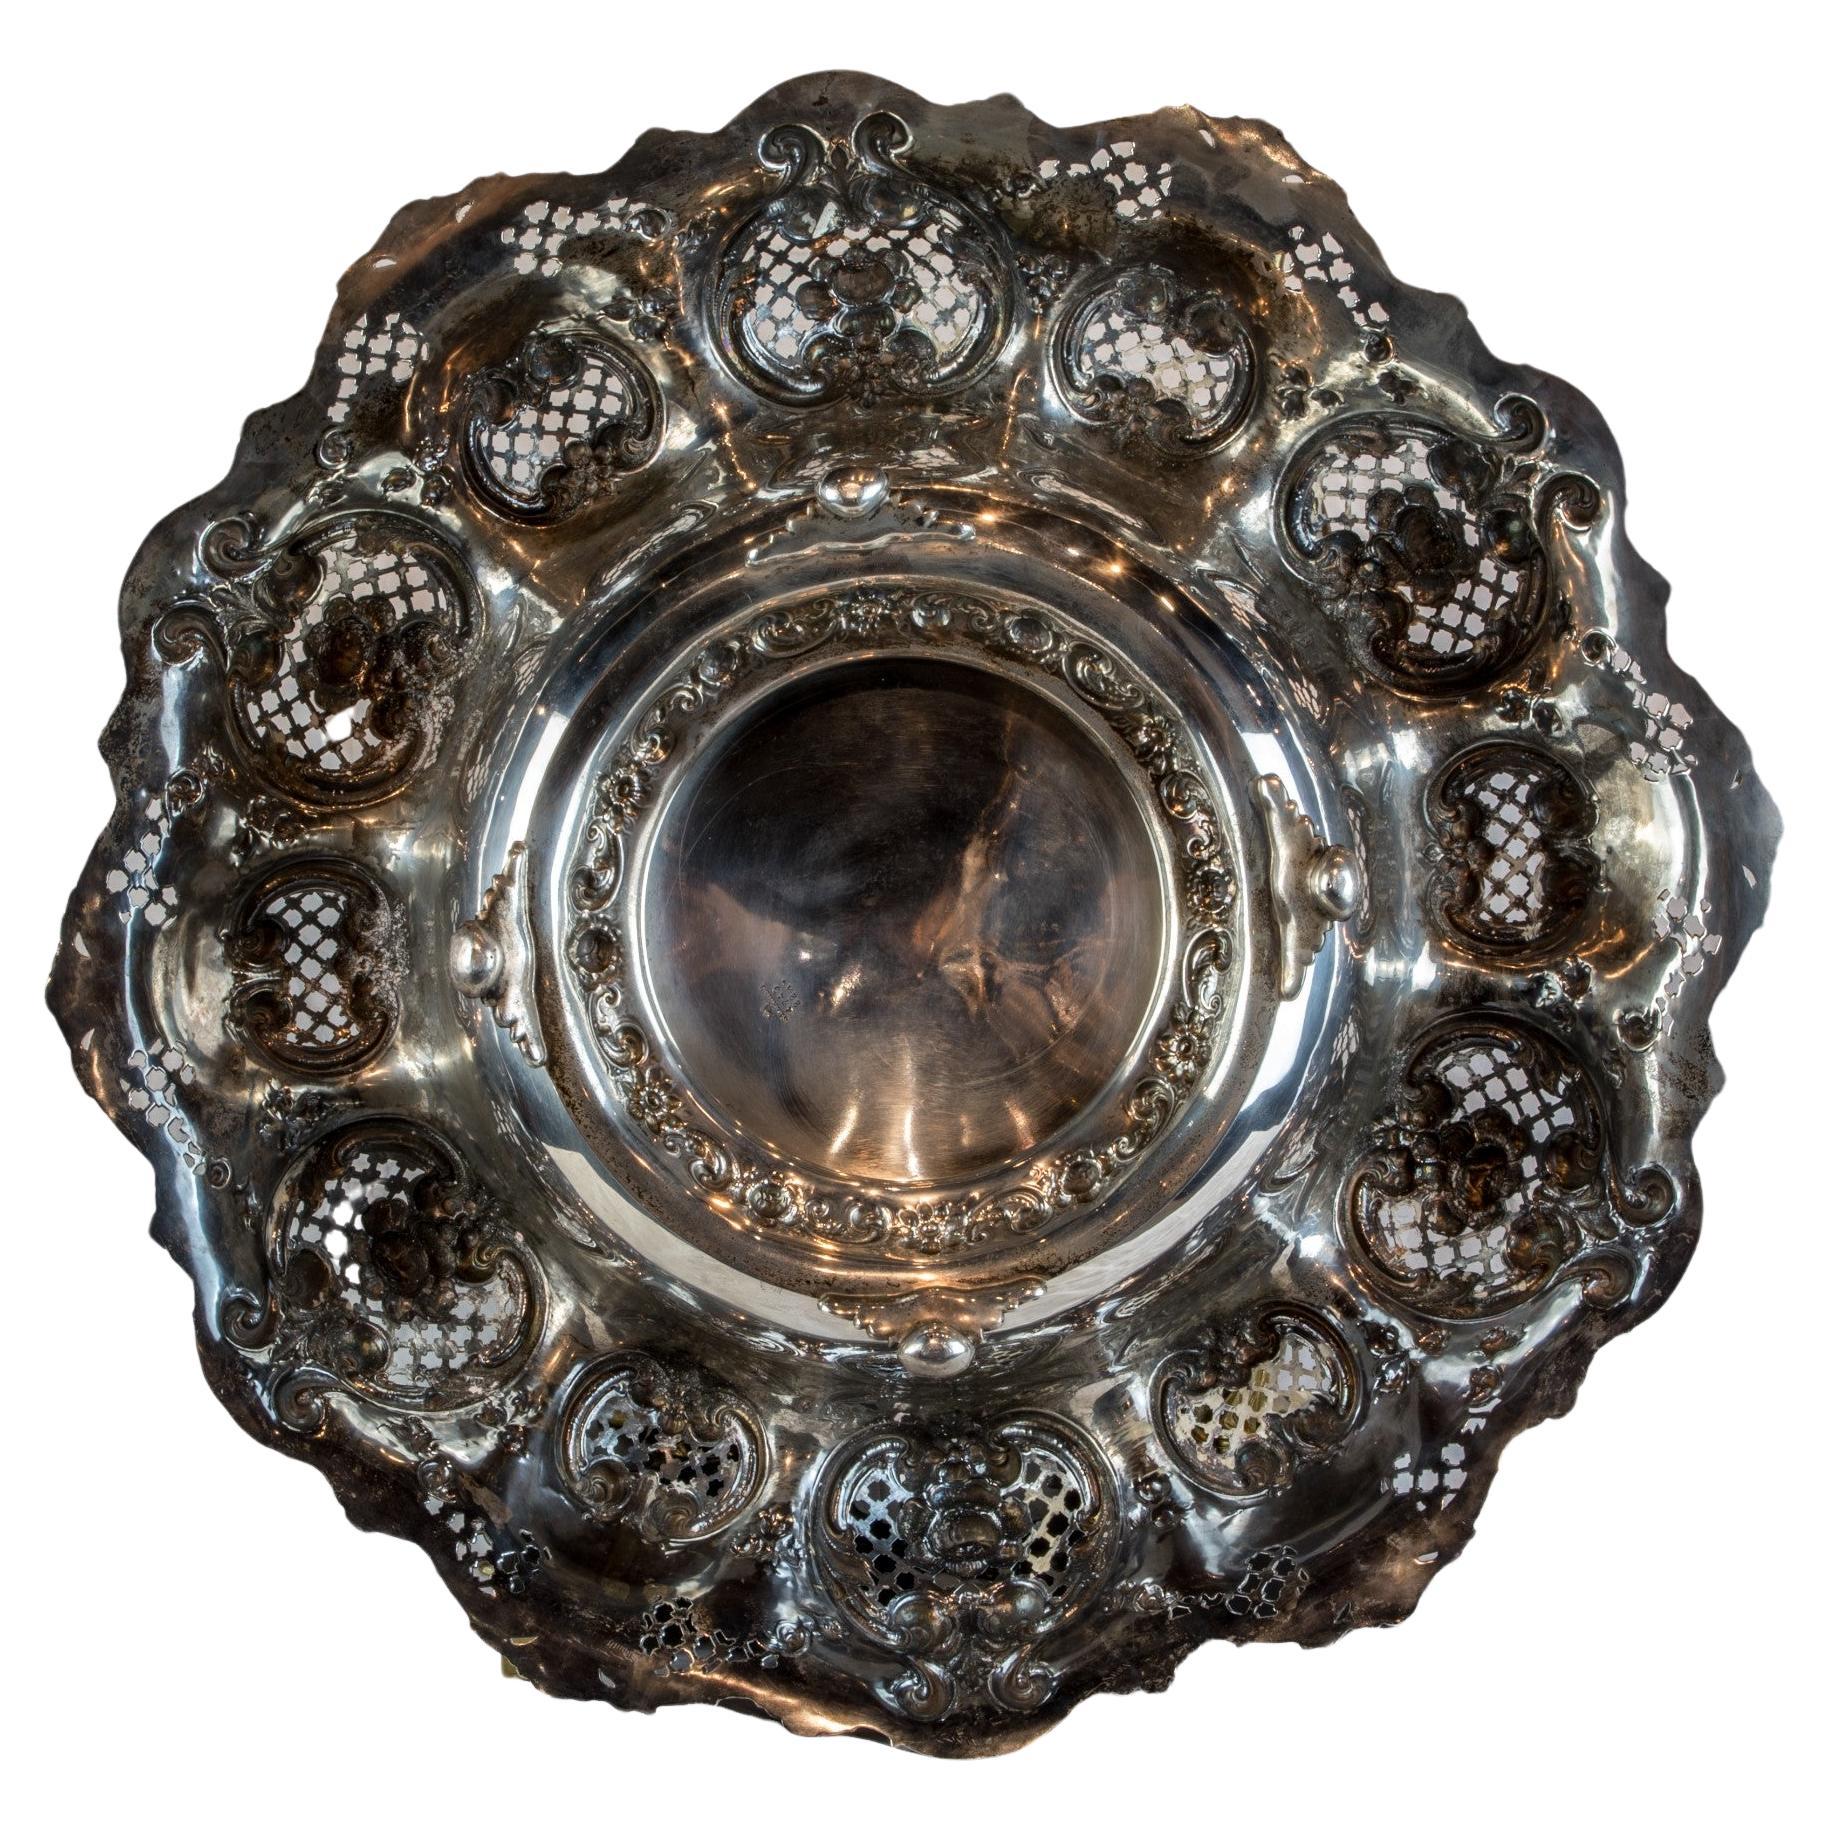 Majestic Ludwig, Redlich & Co. Sterling Silver Centerpiece Bowl, Circa 1890s